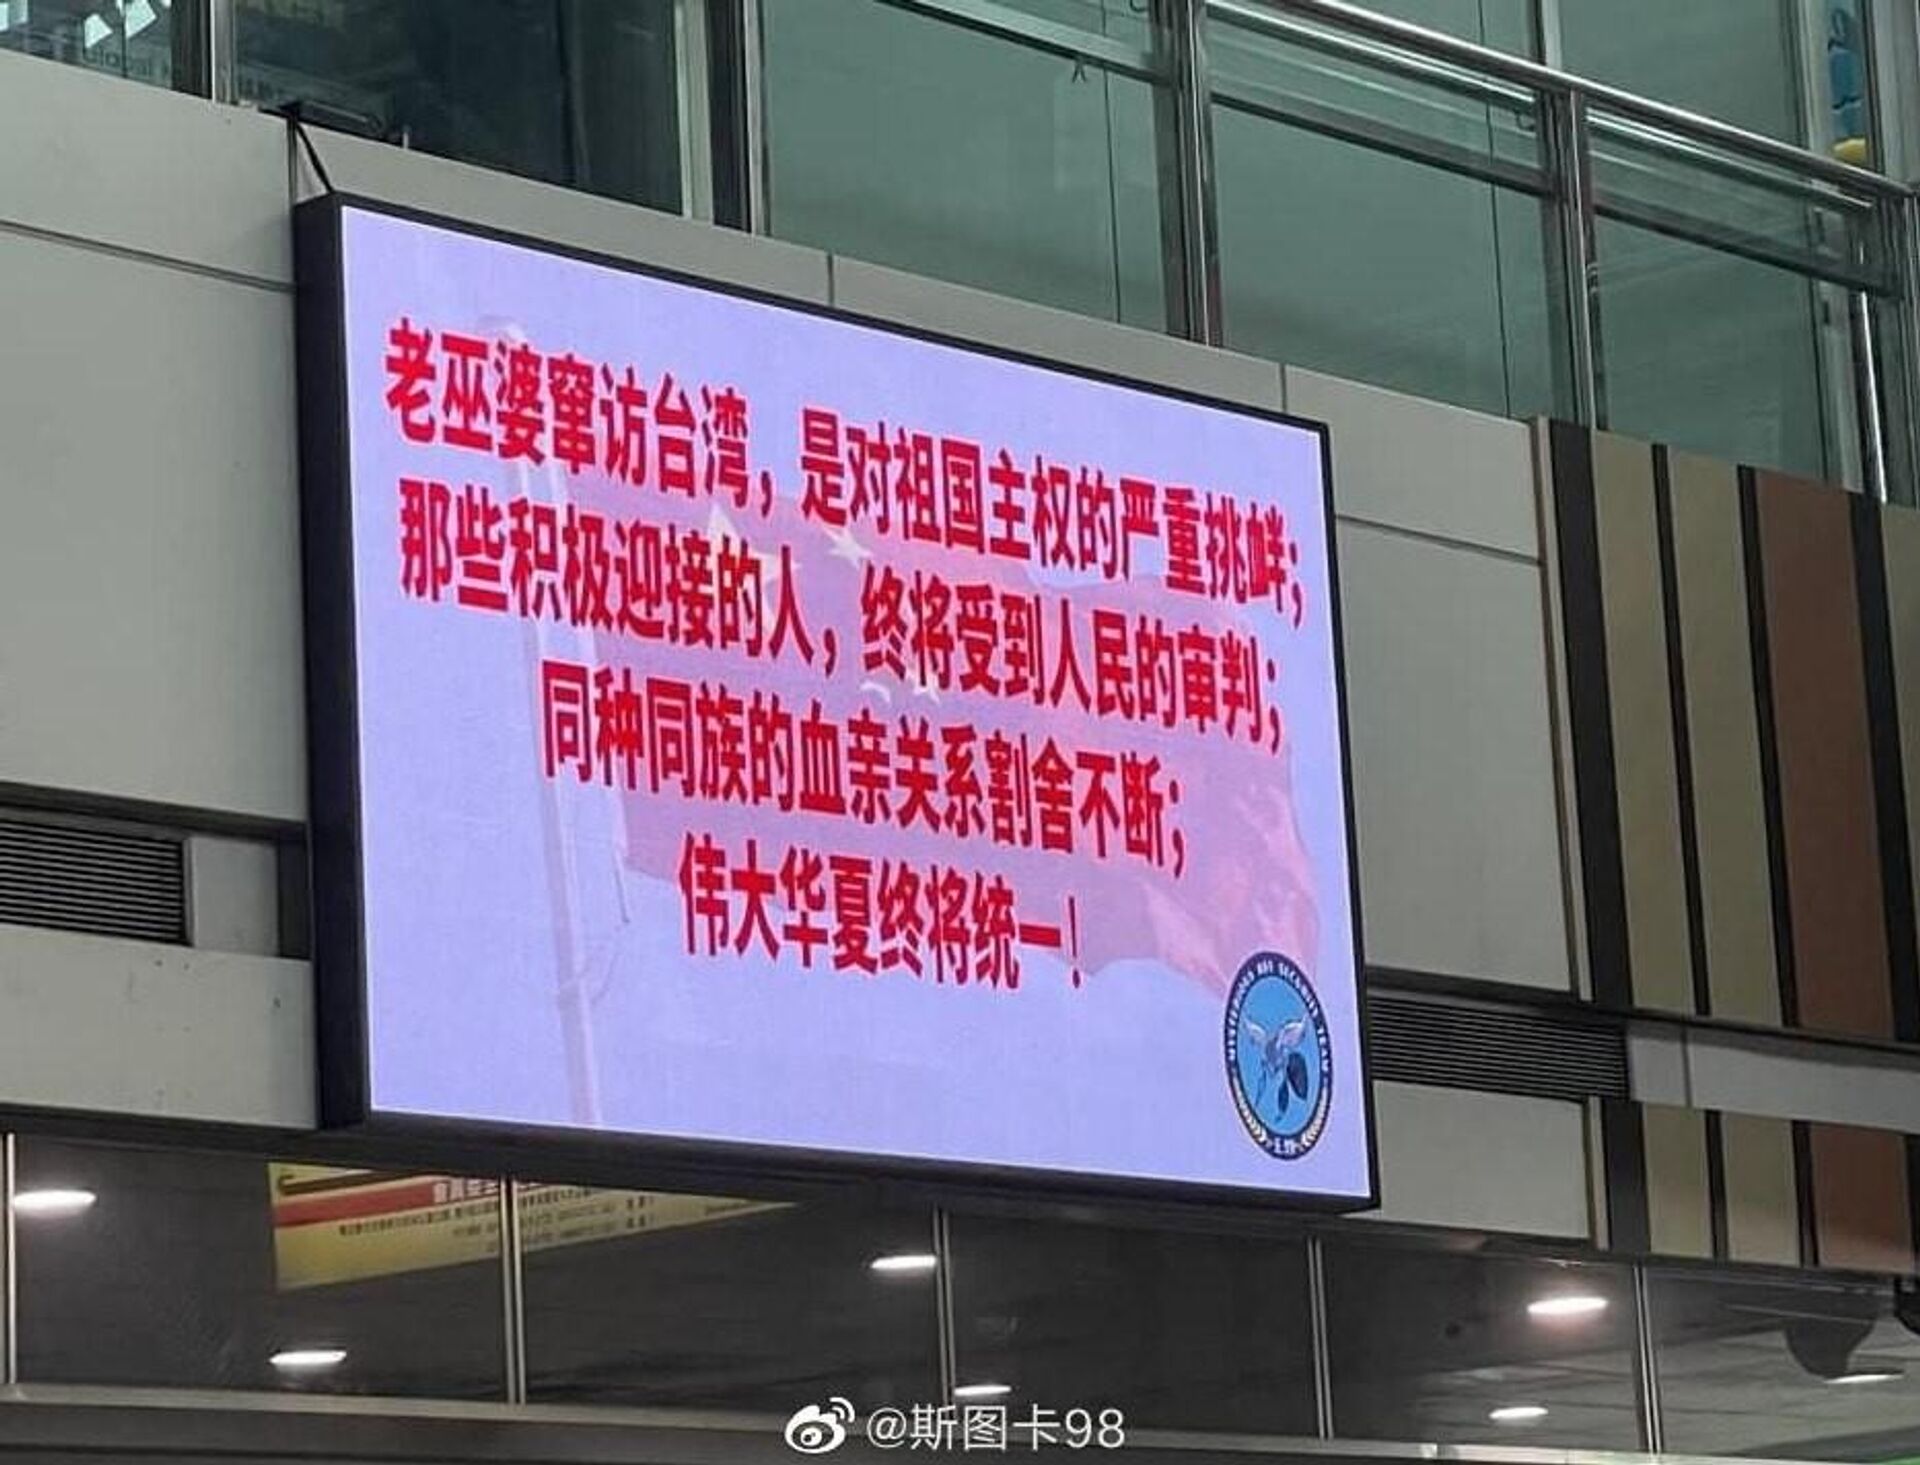 A billboard in Kaohsiung, Taiwan condemning the arrival of US House Speaker Nancy Pelosi - Sputnik International, 1920, 03.08.2022